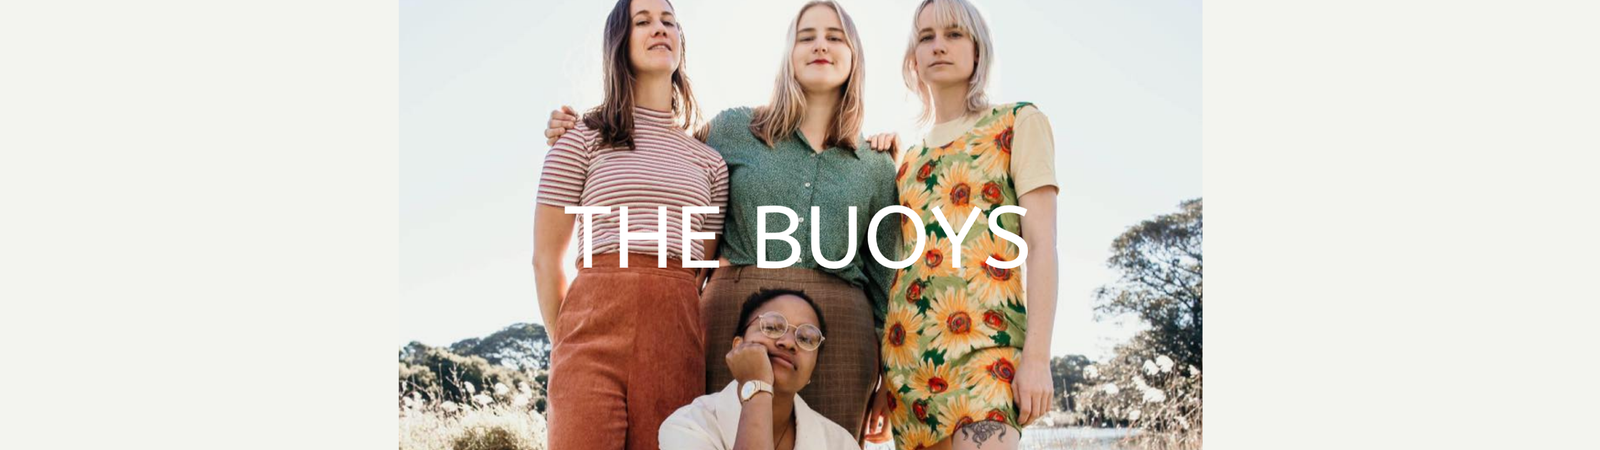 The Buoys